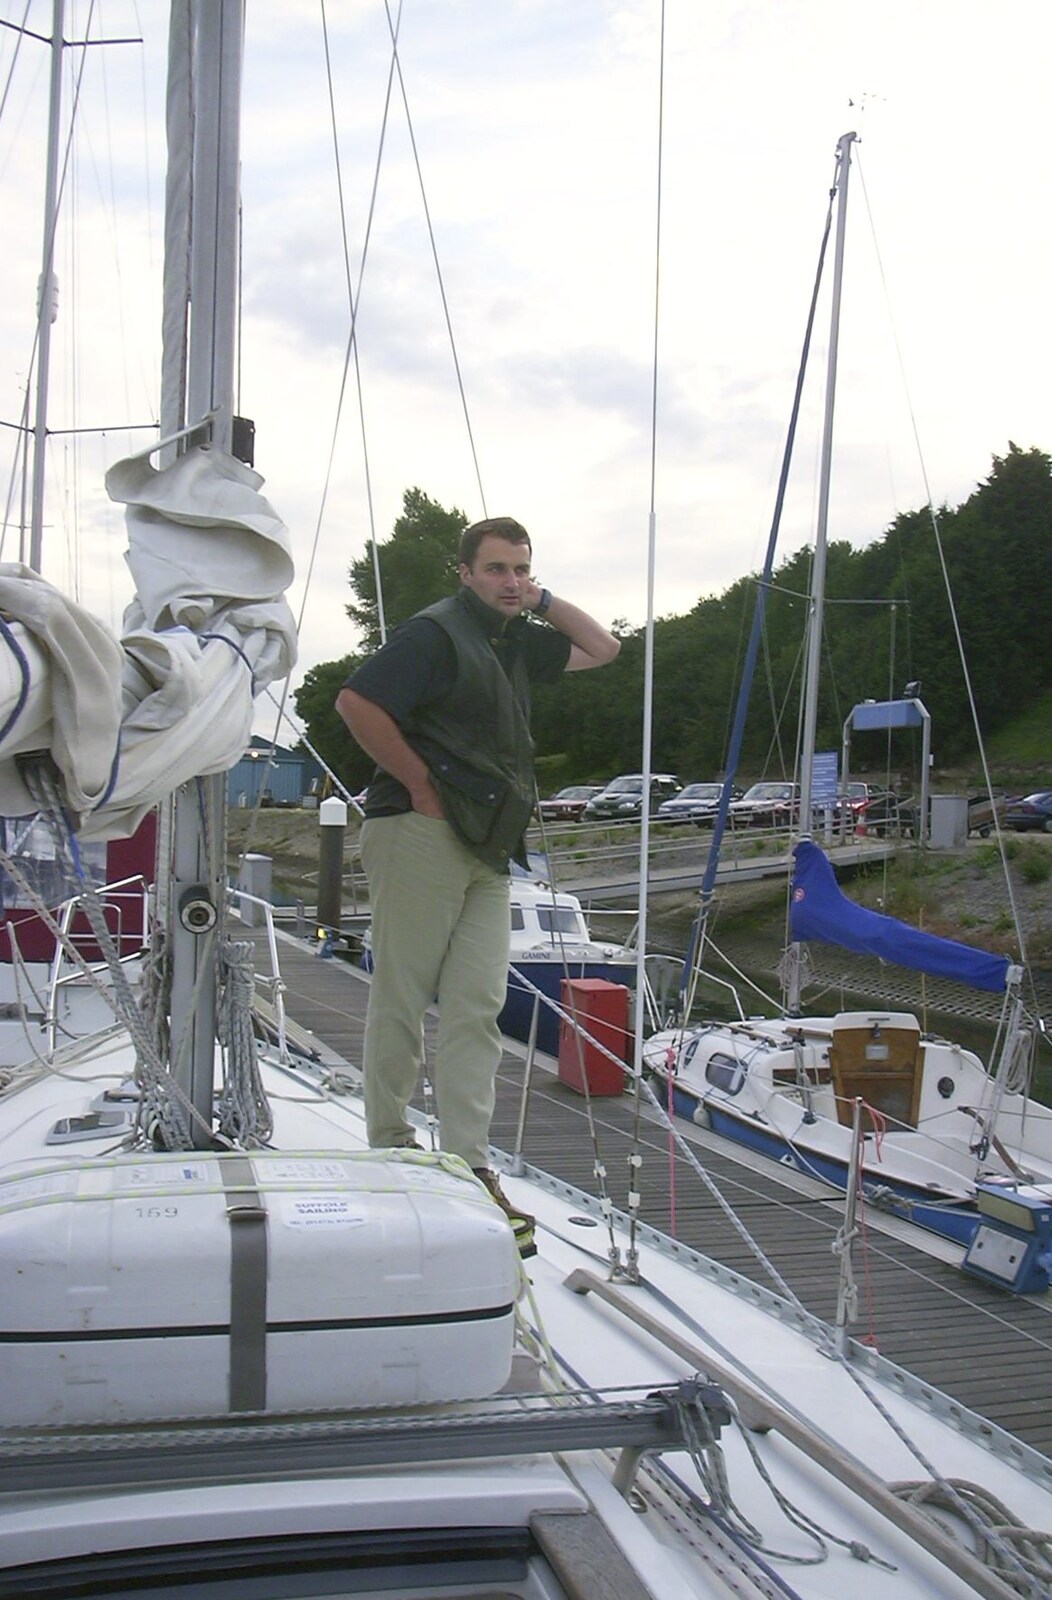 Dan surveys the scene from A 3G Lab Sailing Trip, Shotley, Suffolk - 6th September 2001